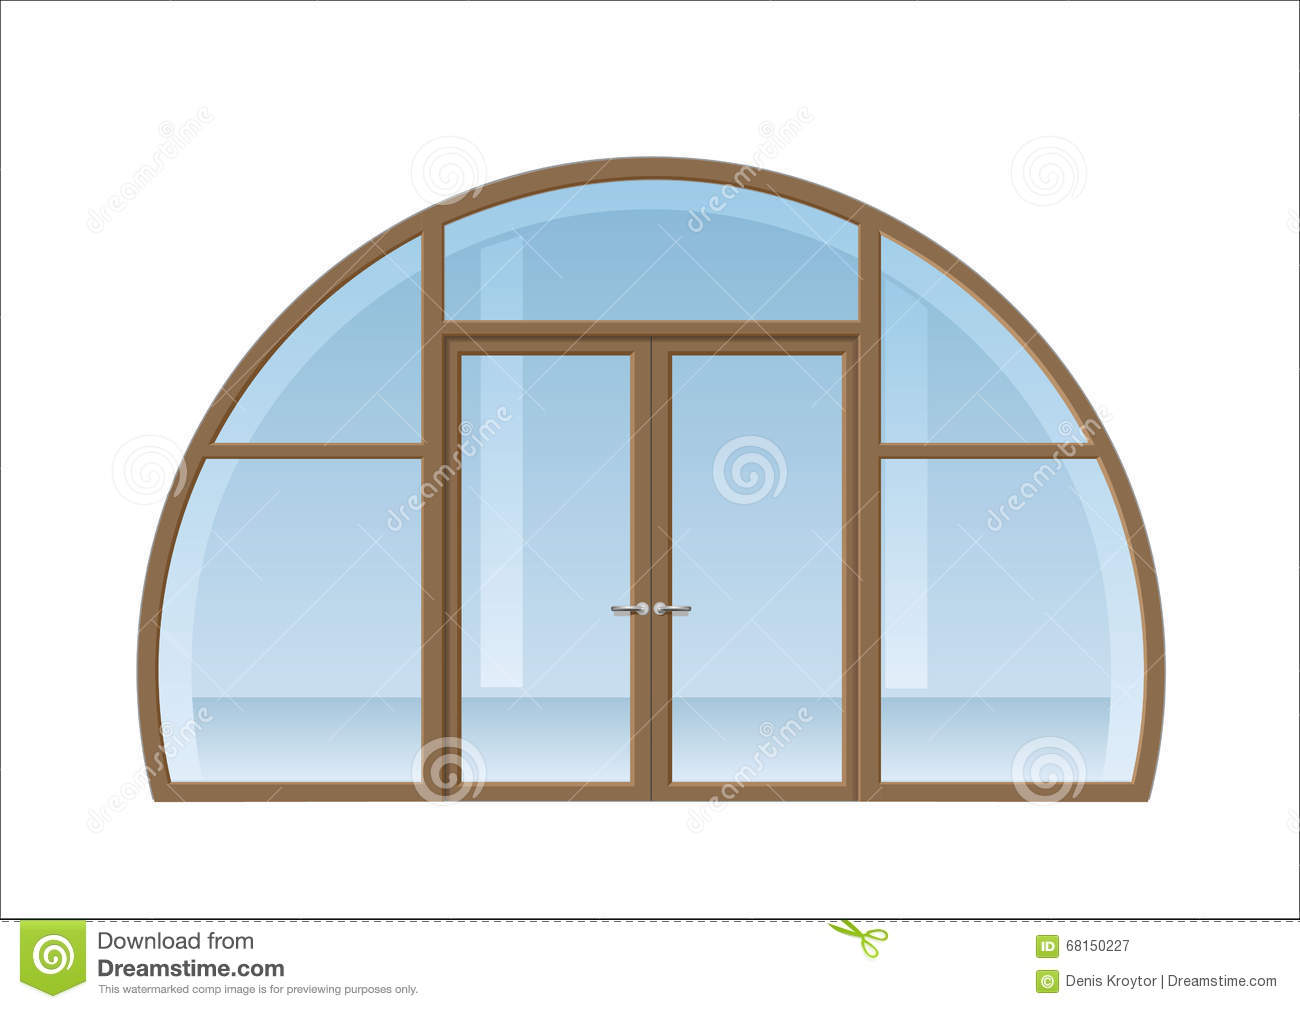 clipart doors and windows - photo #29